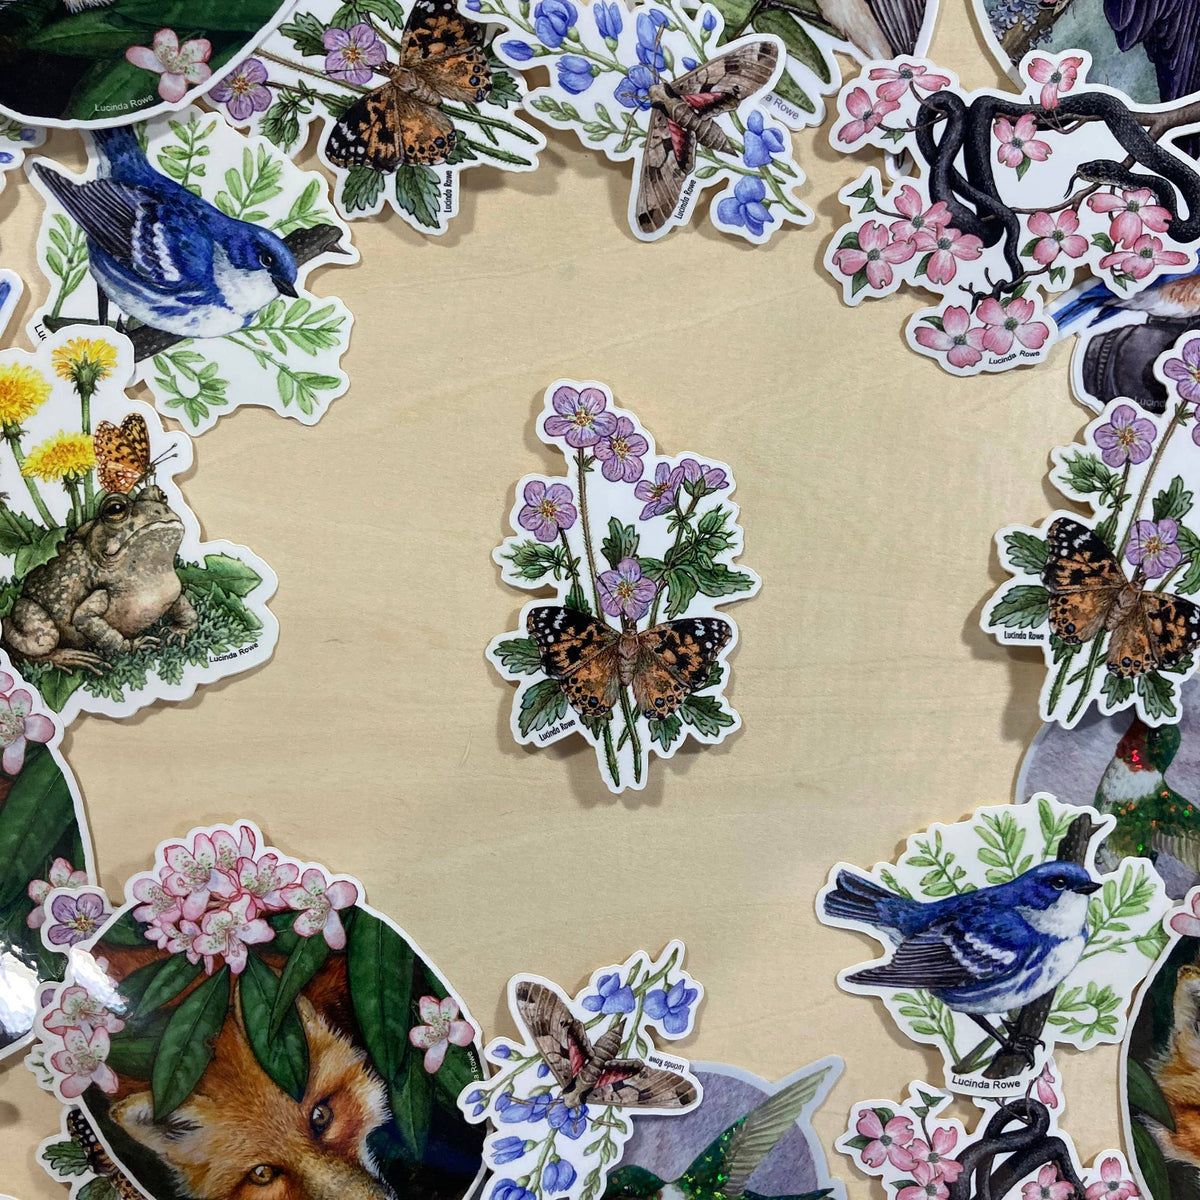 Painted Lady Butterfly On Wild Geranium - Vinyl Sticker